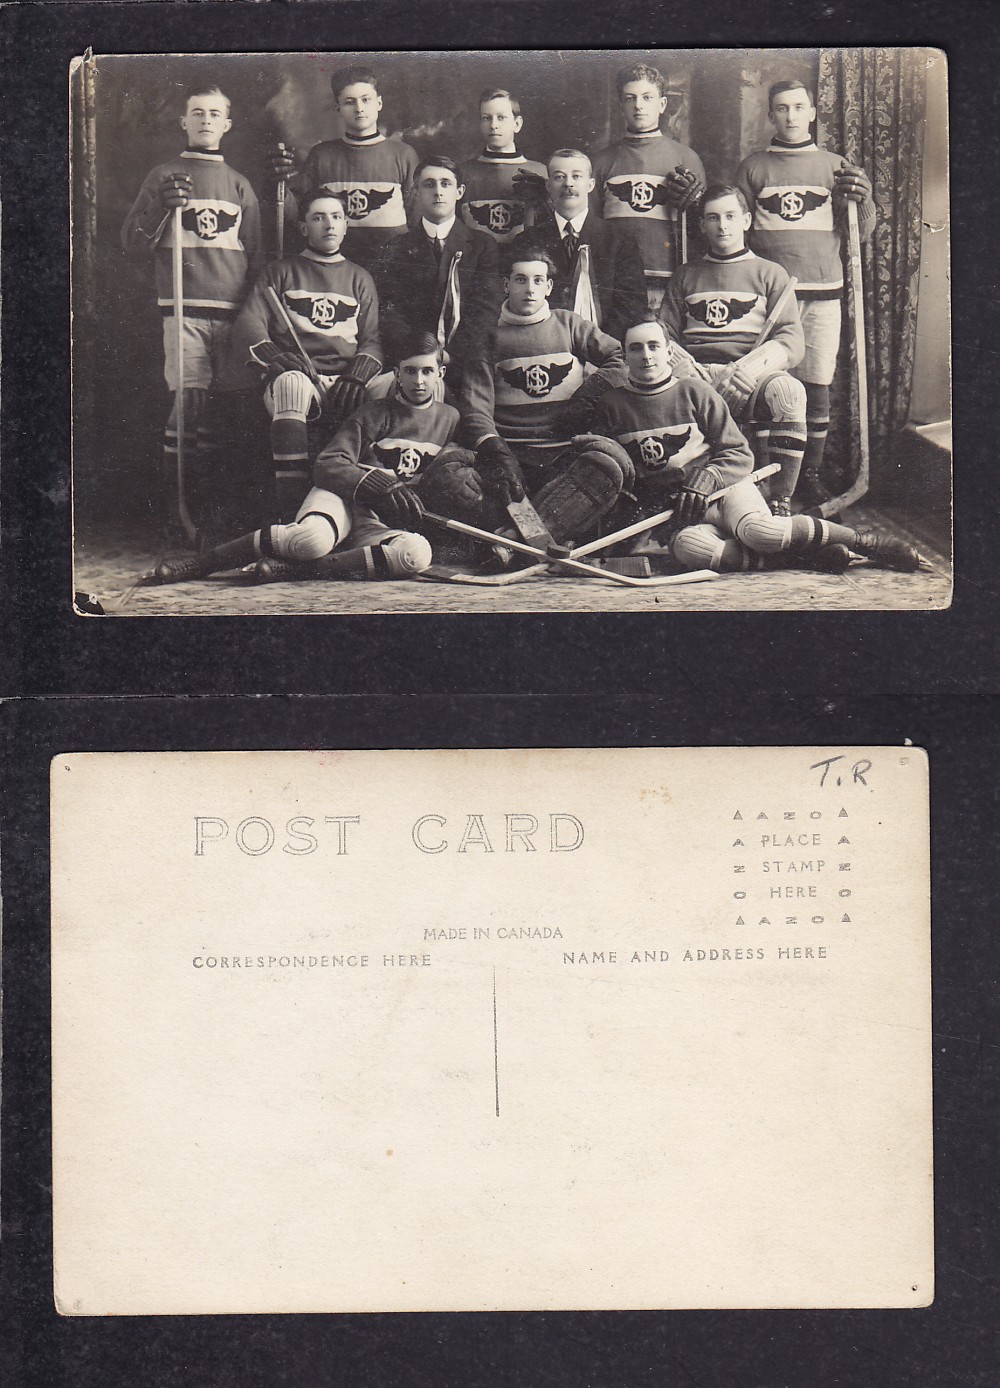 1900'S HOCKEY TEAM POST CARD photo